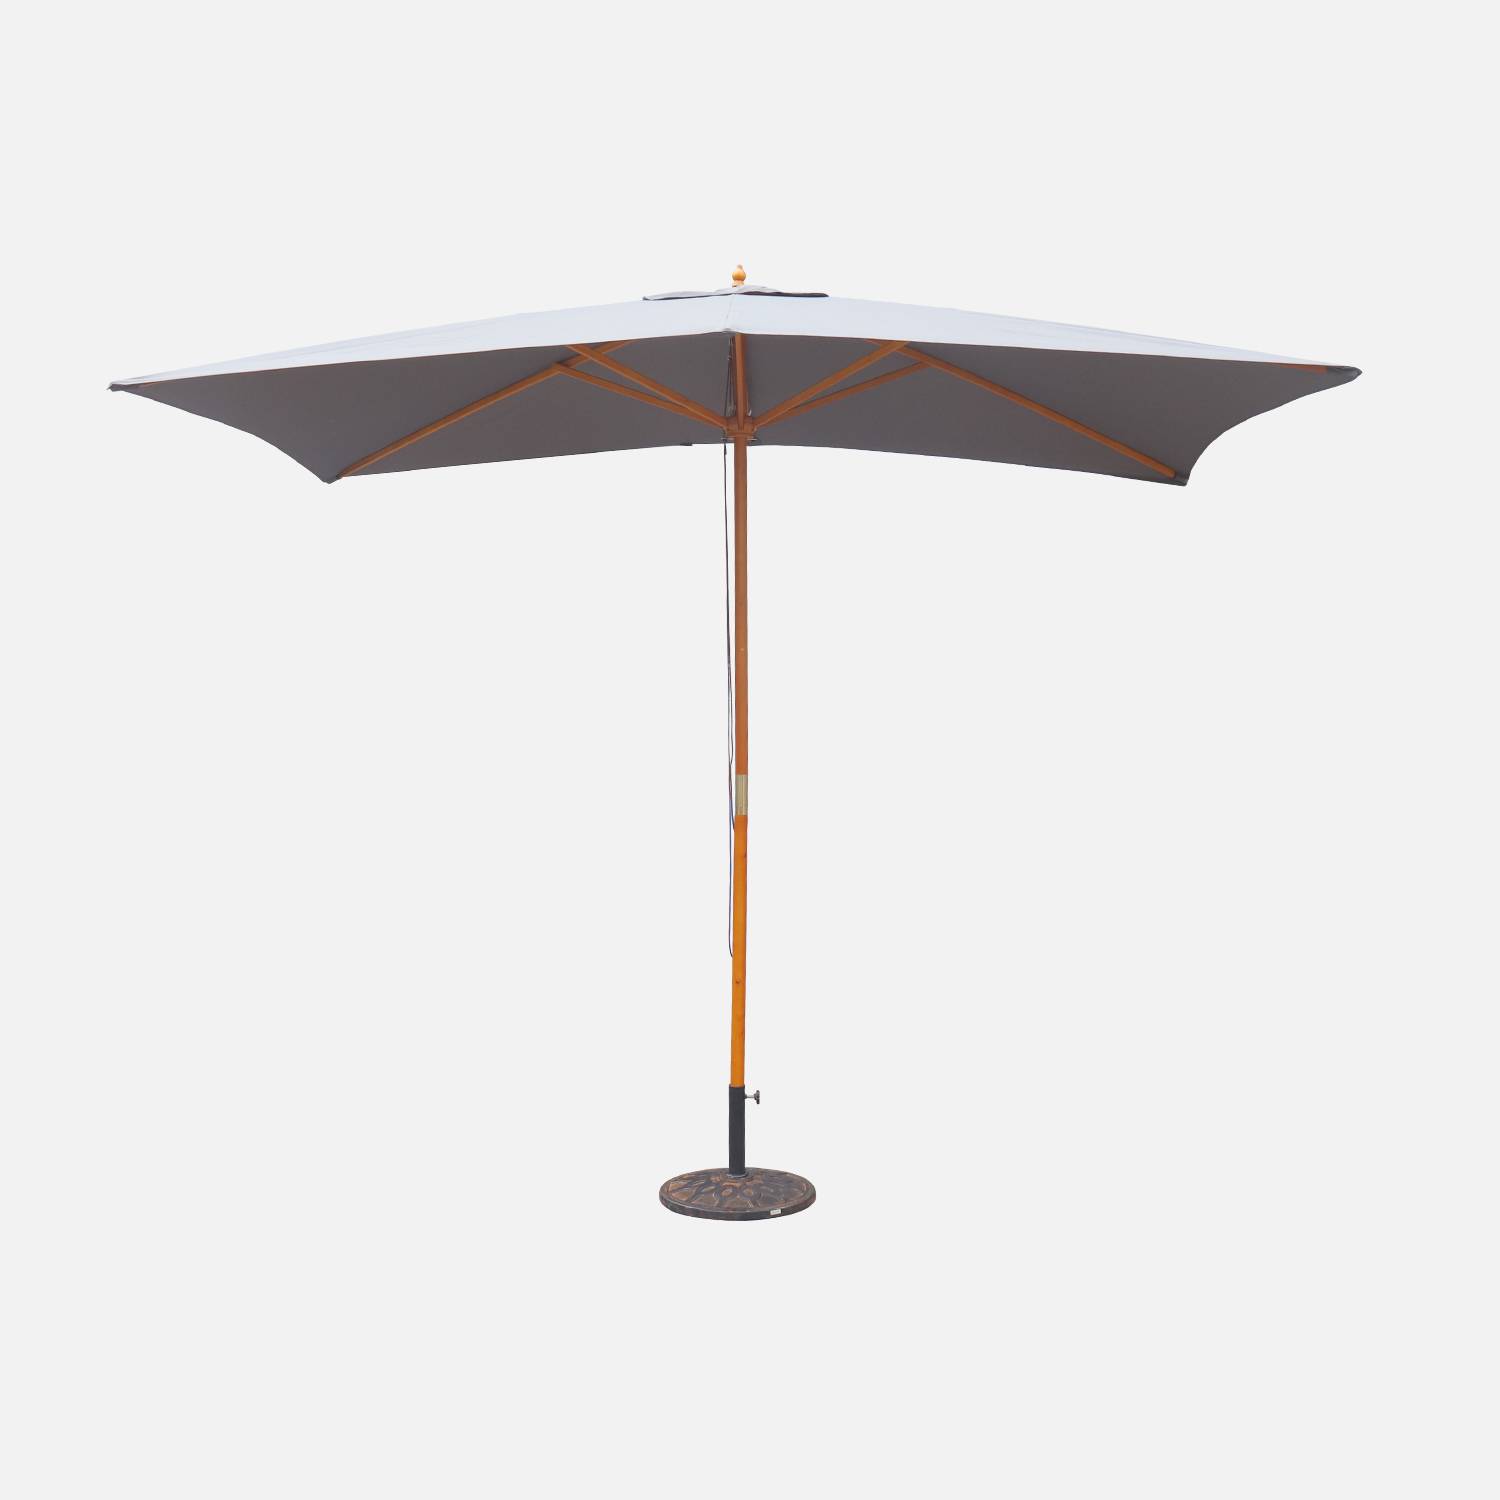 Parasol rectangular de madera 2x3m - Cabourg Gris - poste central de madera, sistema de apertura manual, polea Photo2